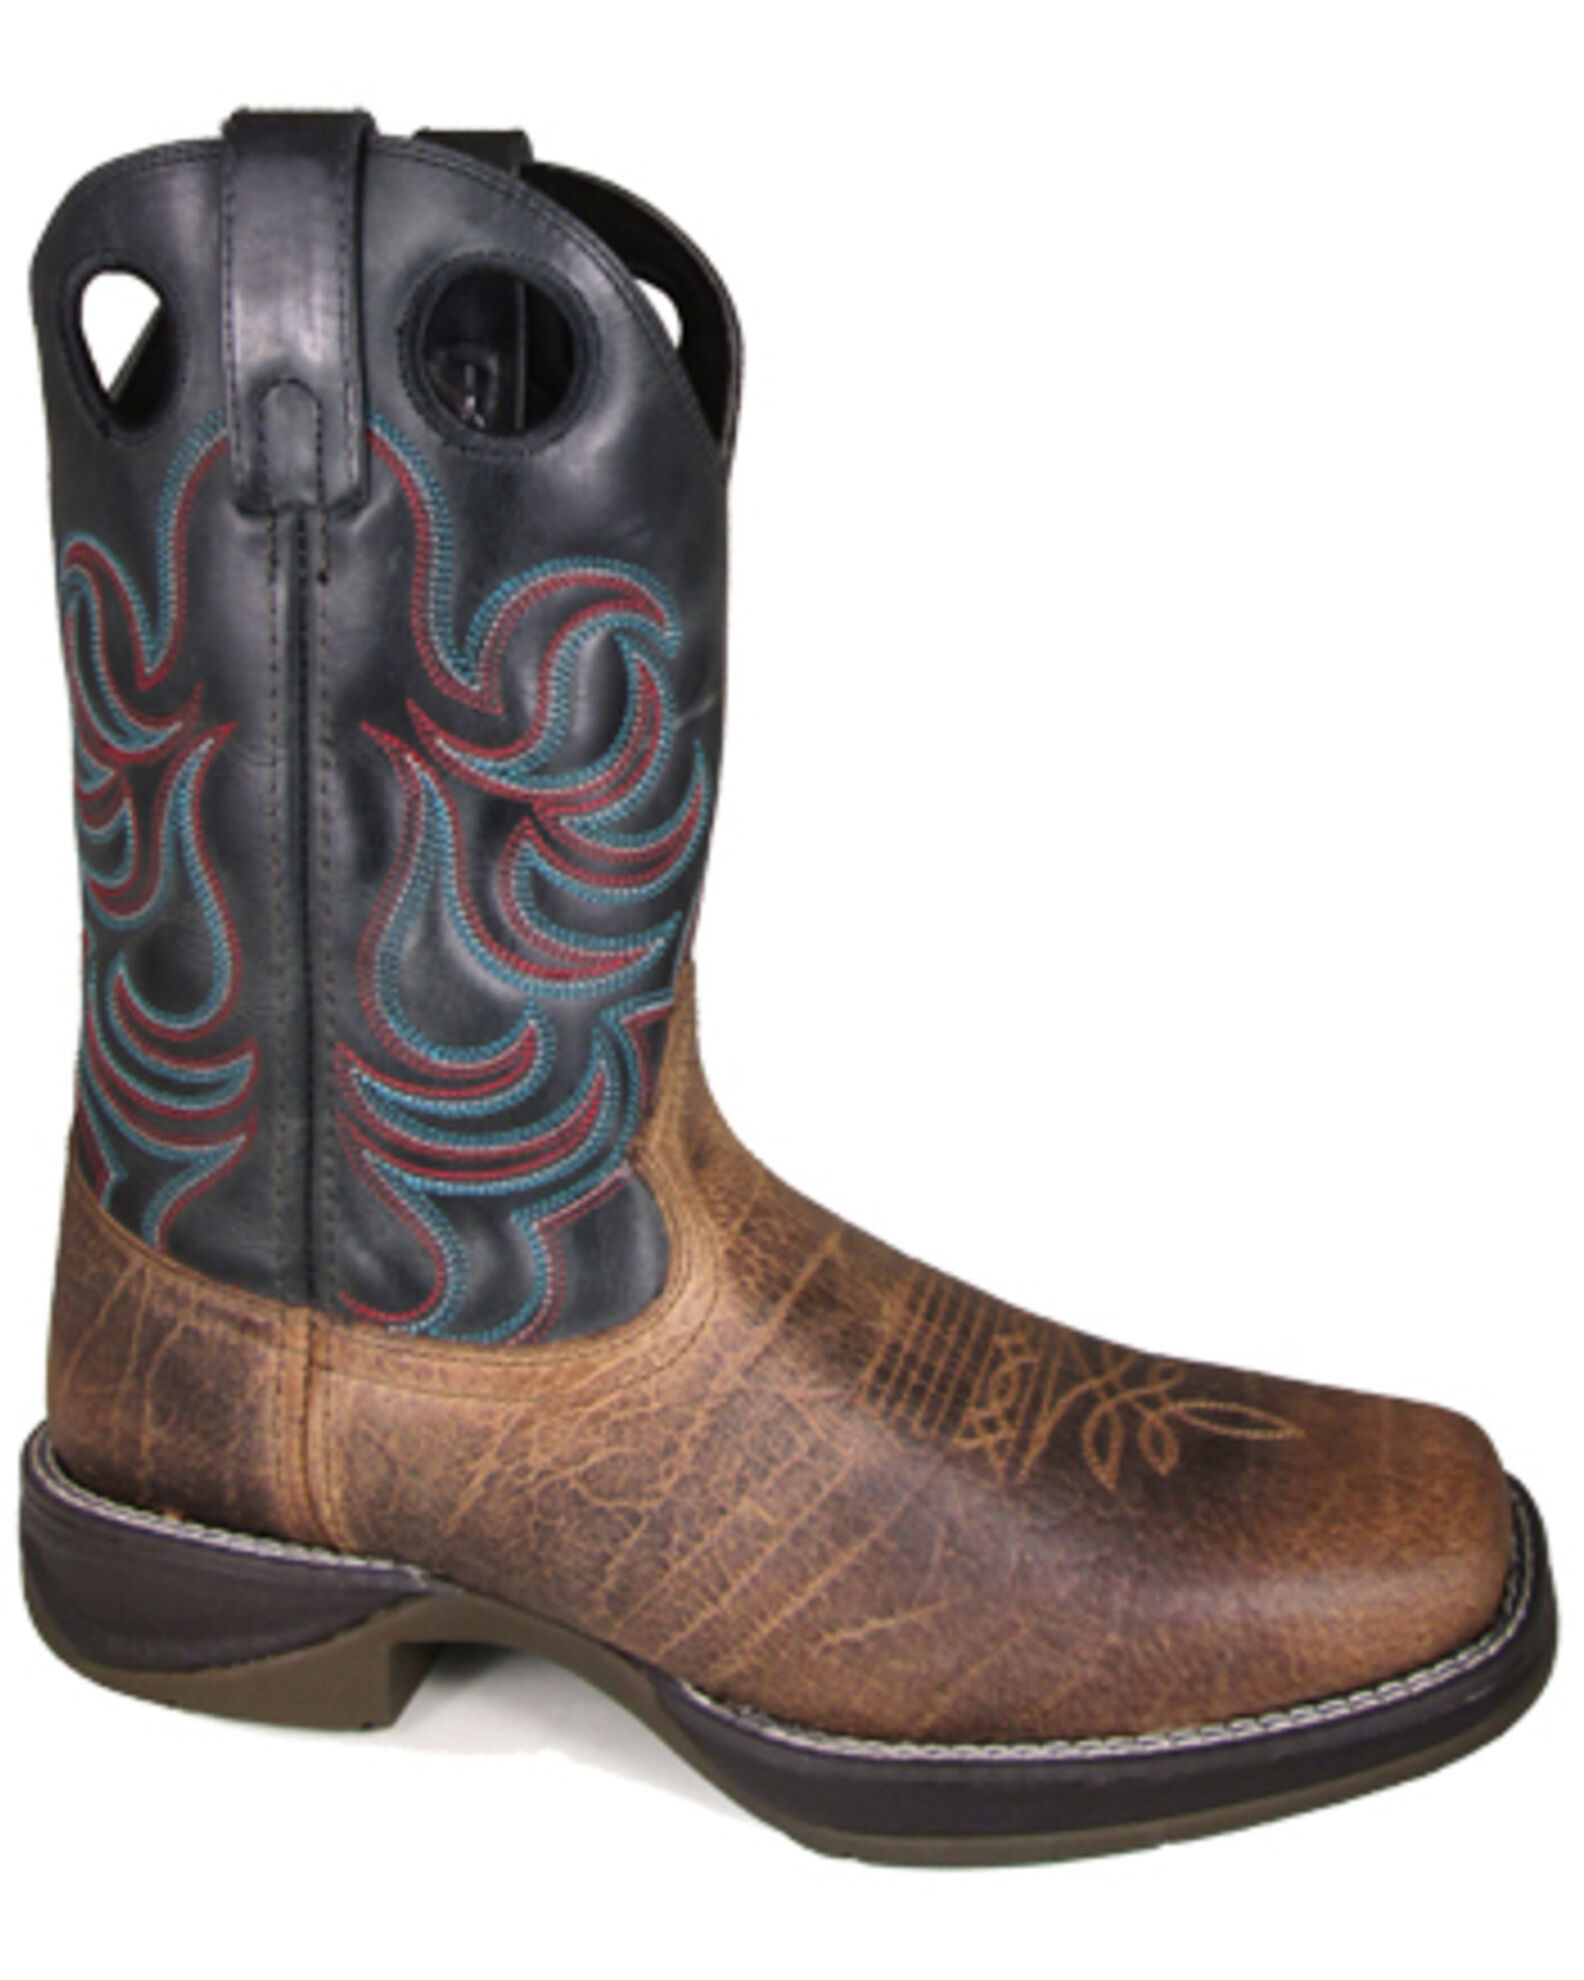 Smoky Mountain Boots - Boot Barn